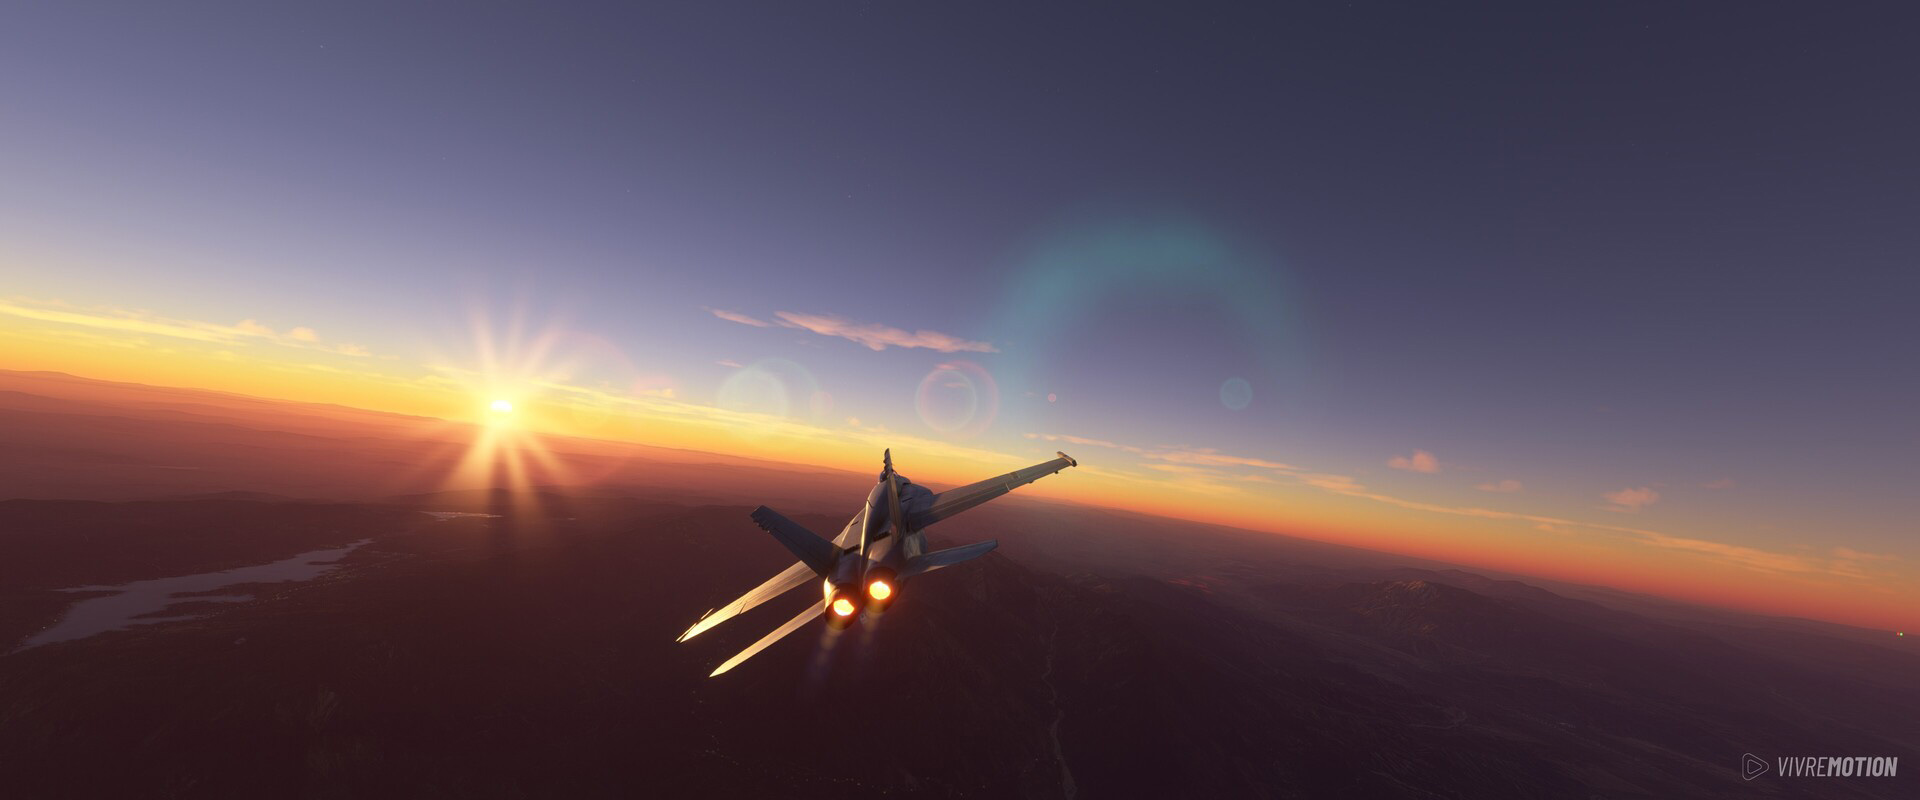 Sun Set - Boeing F/A-18 Super Hornet - Microsoft Flight Simulator - VIVRE-MOTION